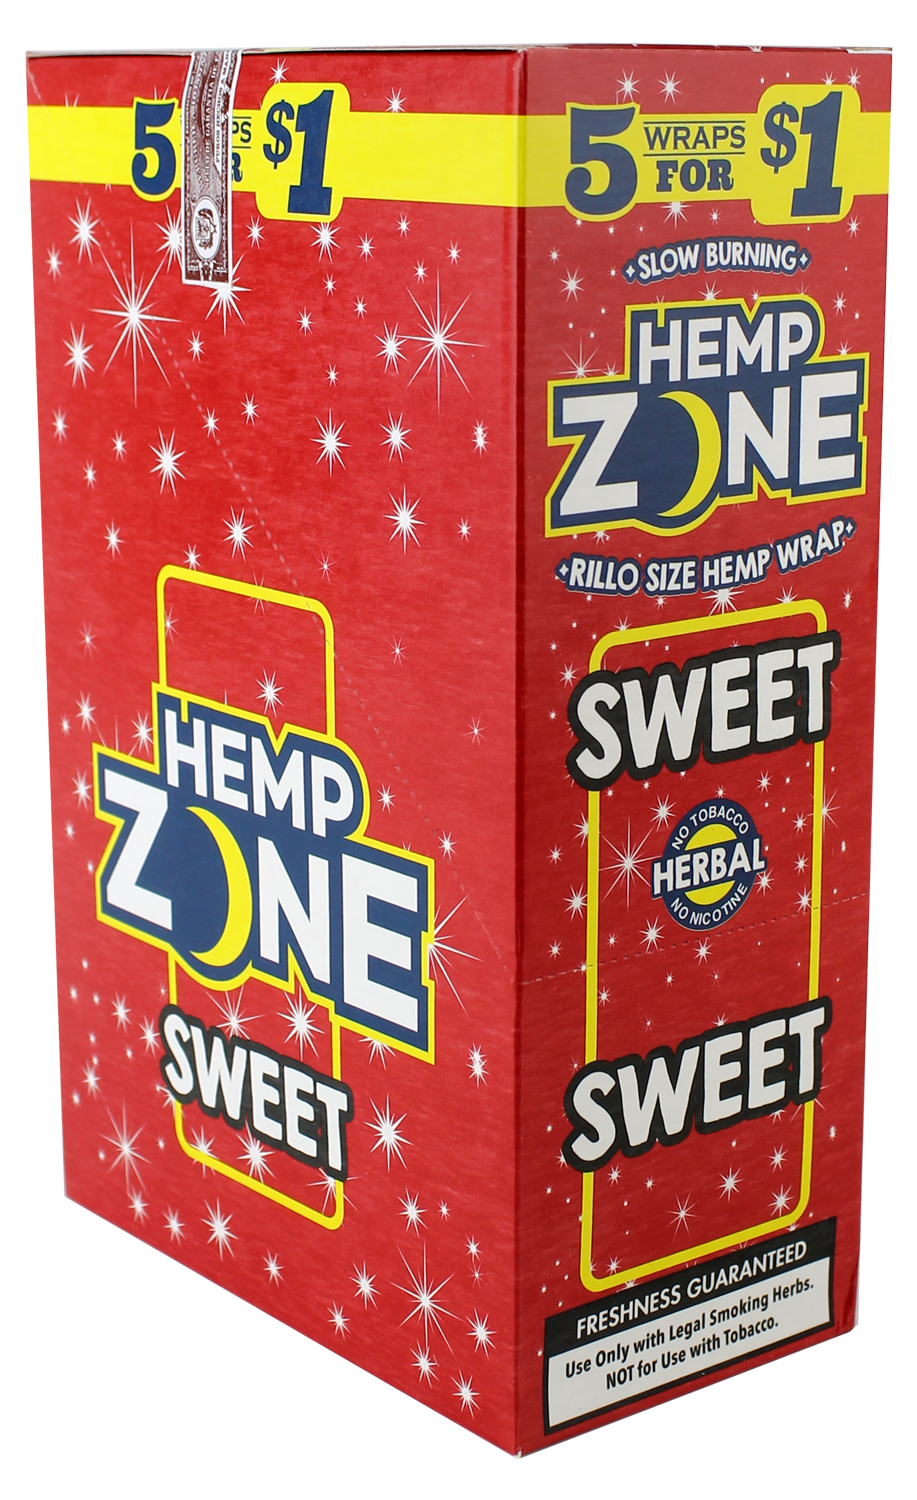 Sweet | Hemp Zone | Reviews on Judge.me